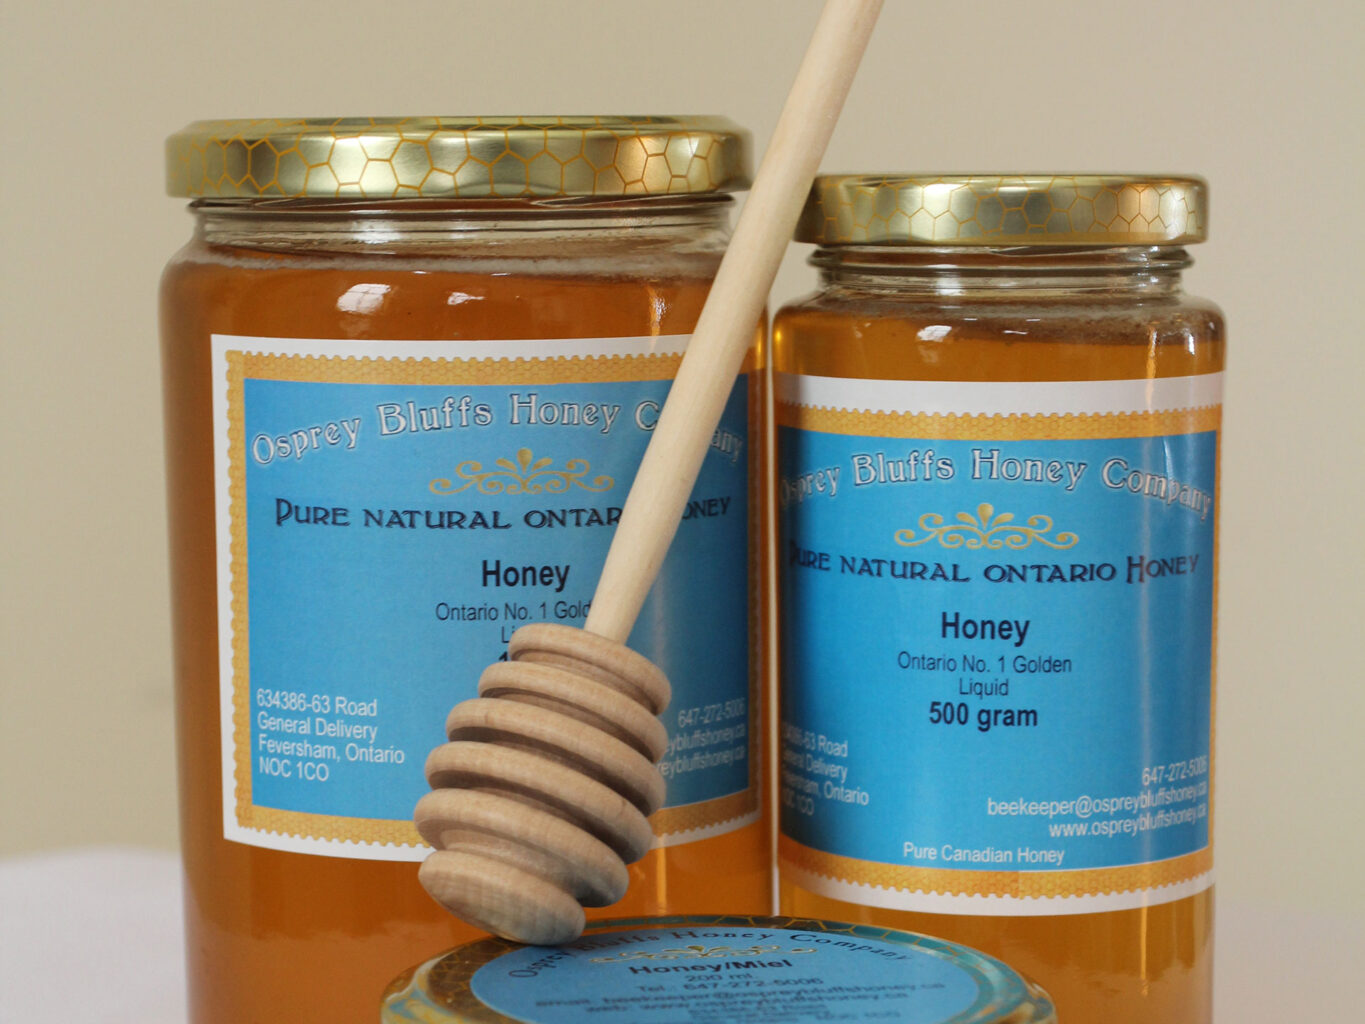 Osprey Bluffs Honey Company